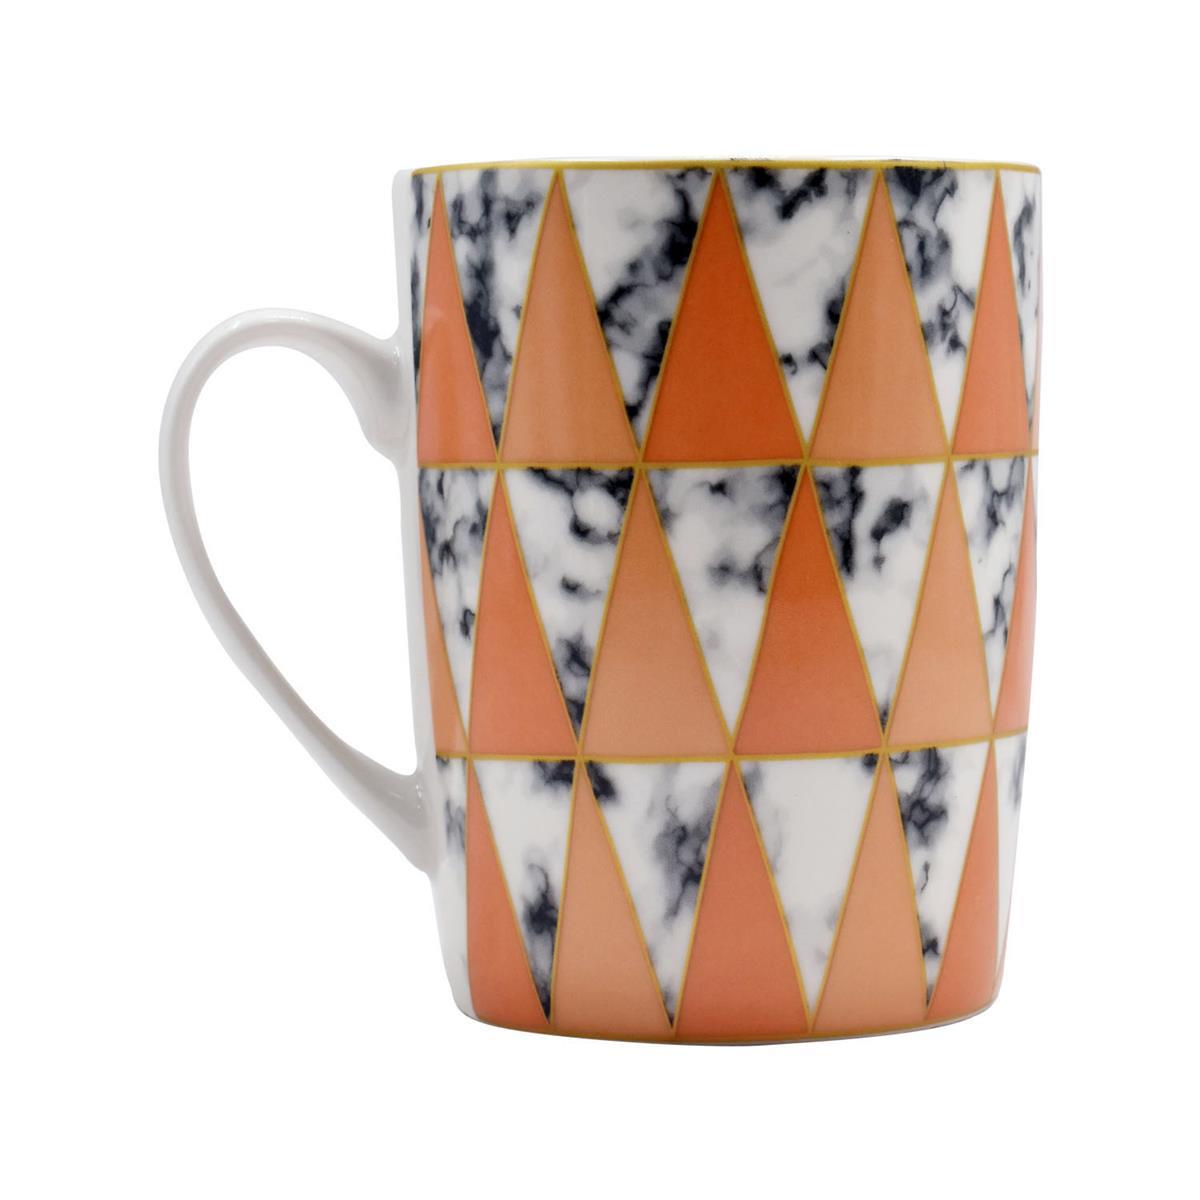 Printed Ceramic Tall Coffee or Tea Mug with handle - 325ml (R4760-D)